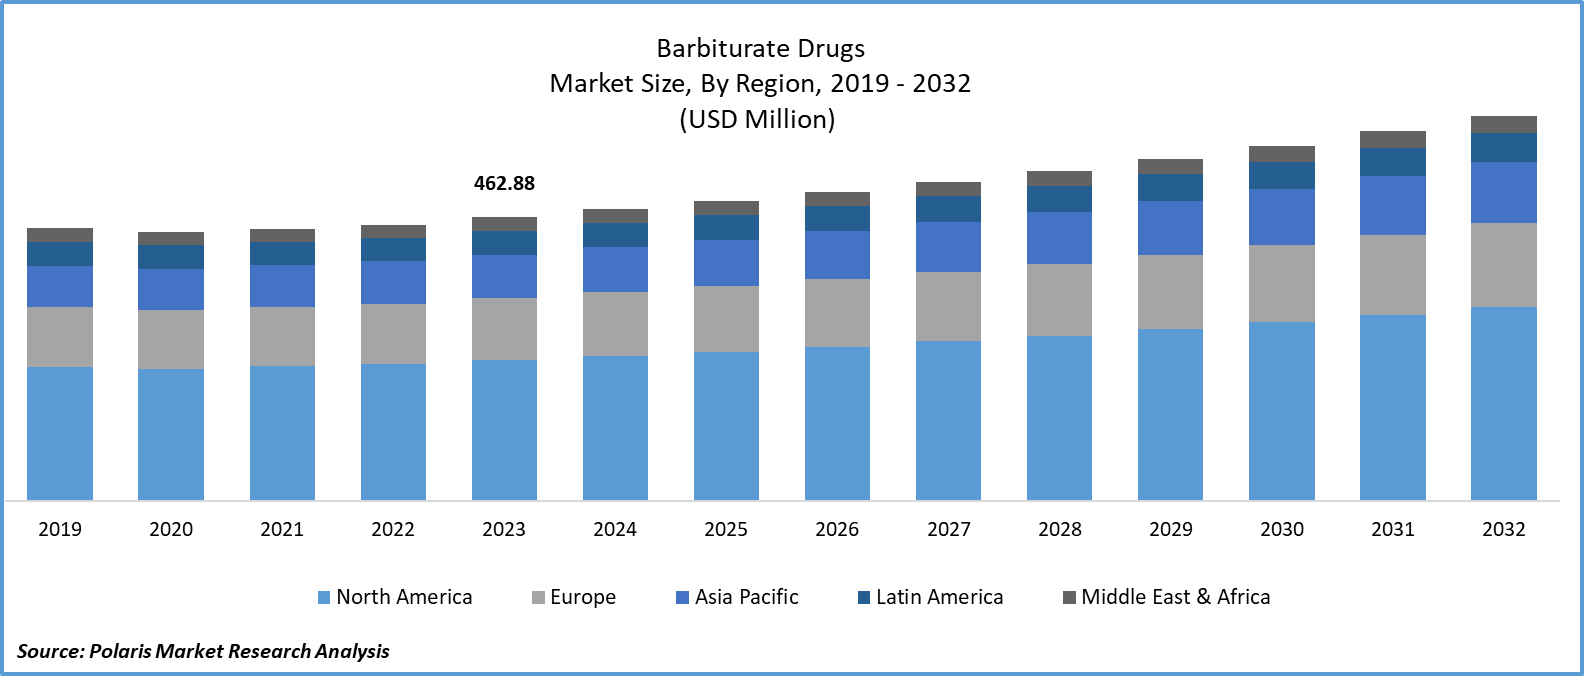 Barbiturate Drugs Market Size